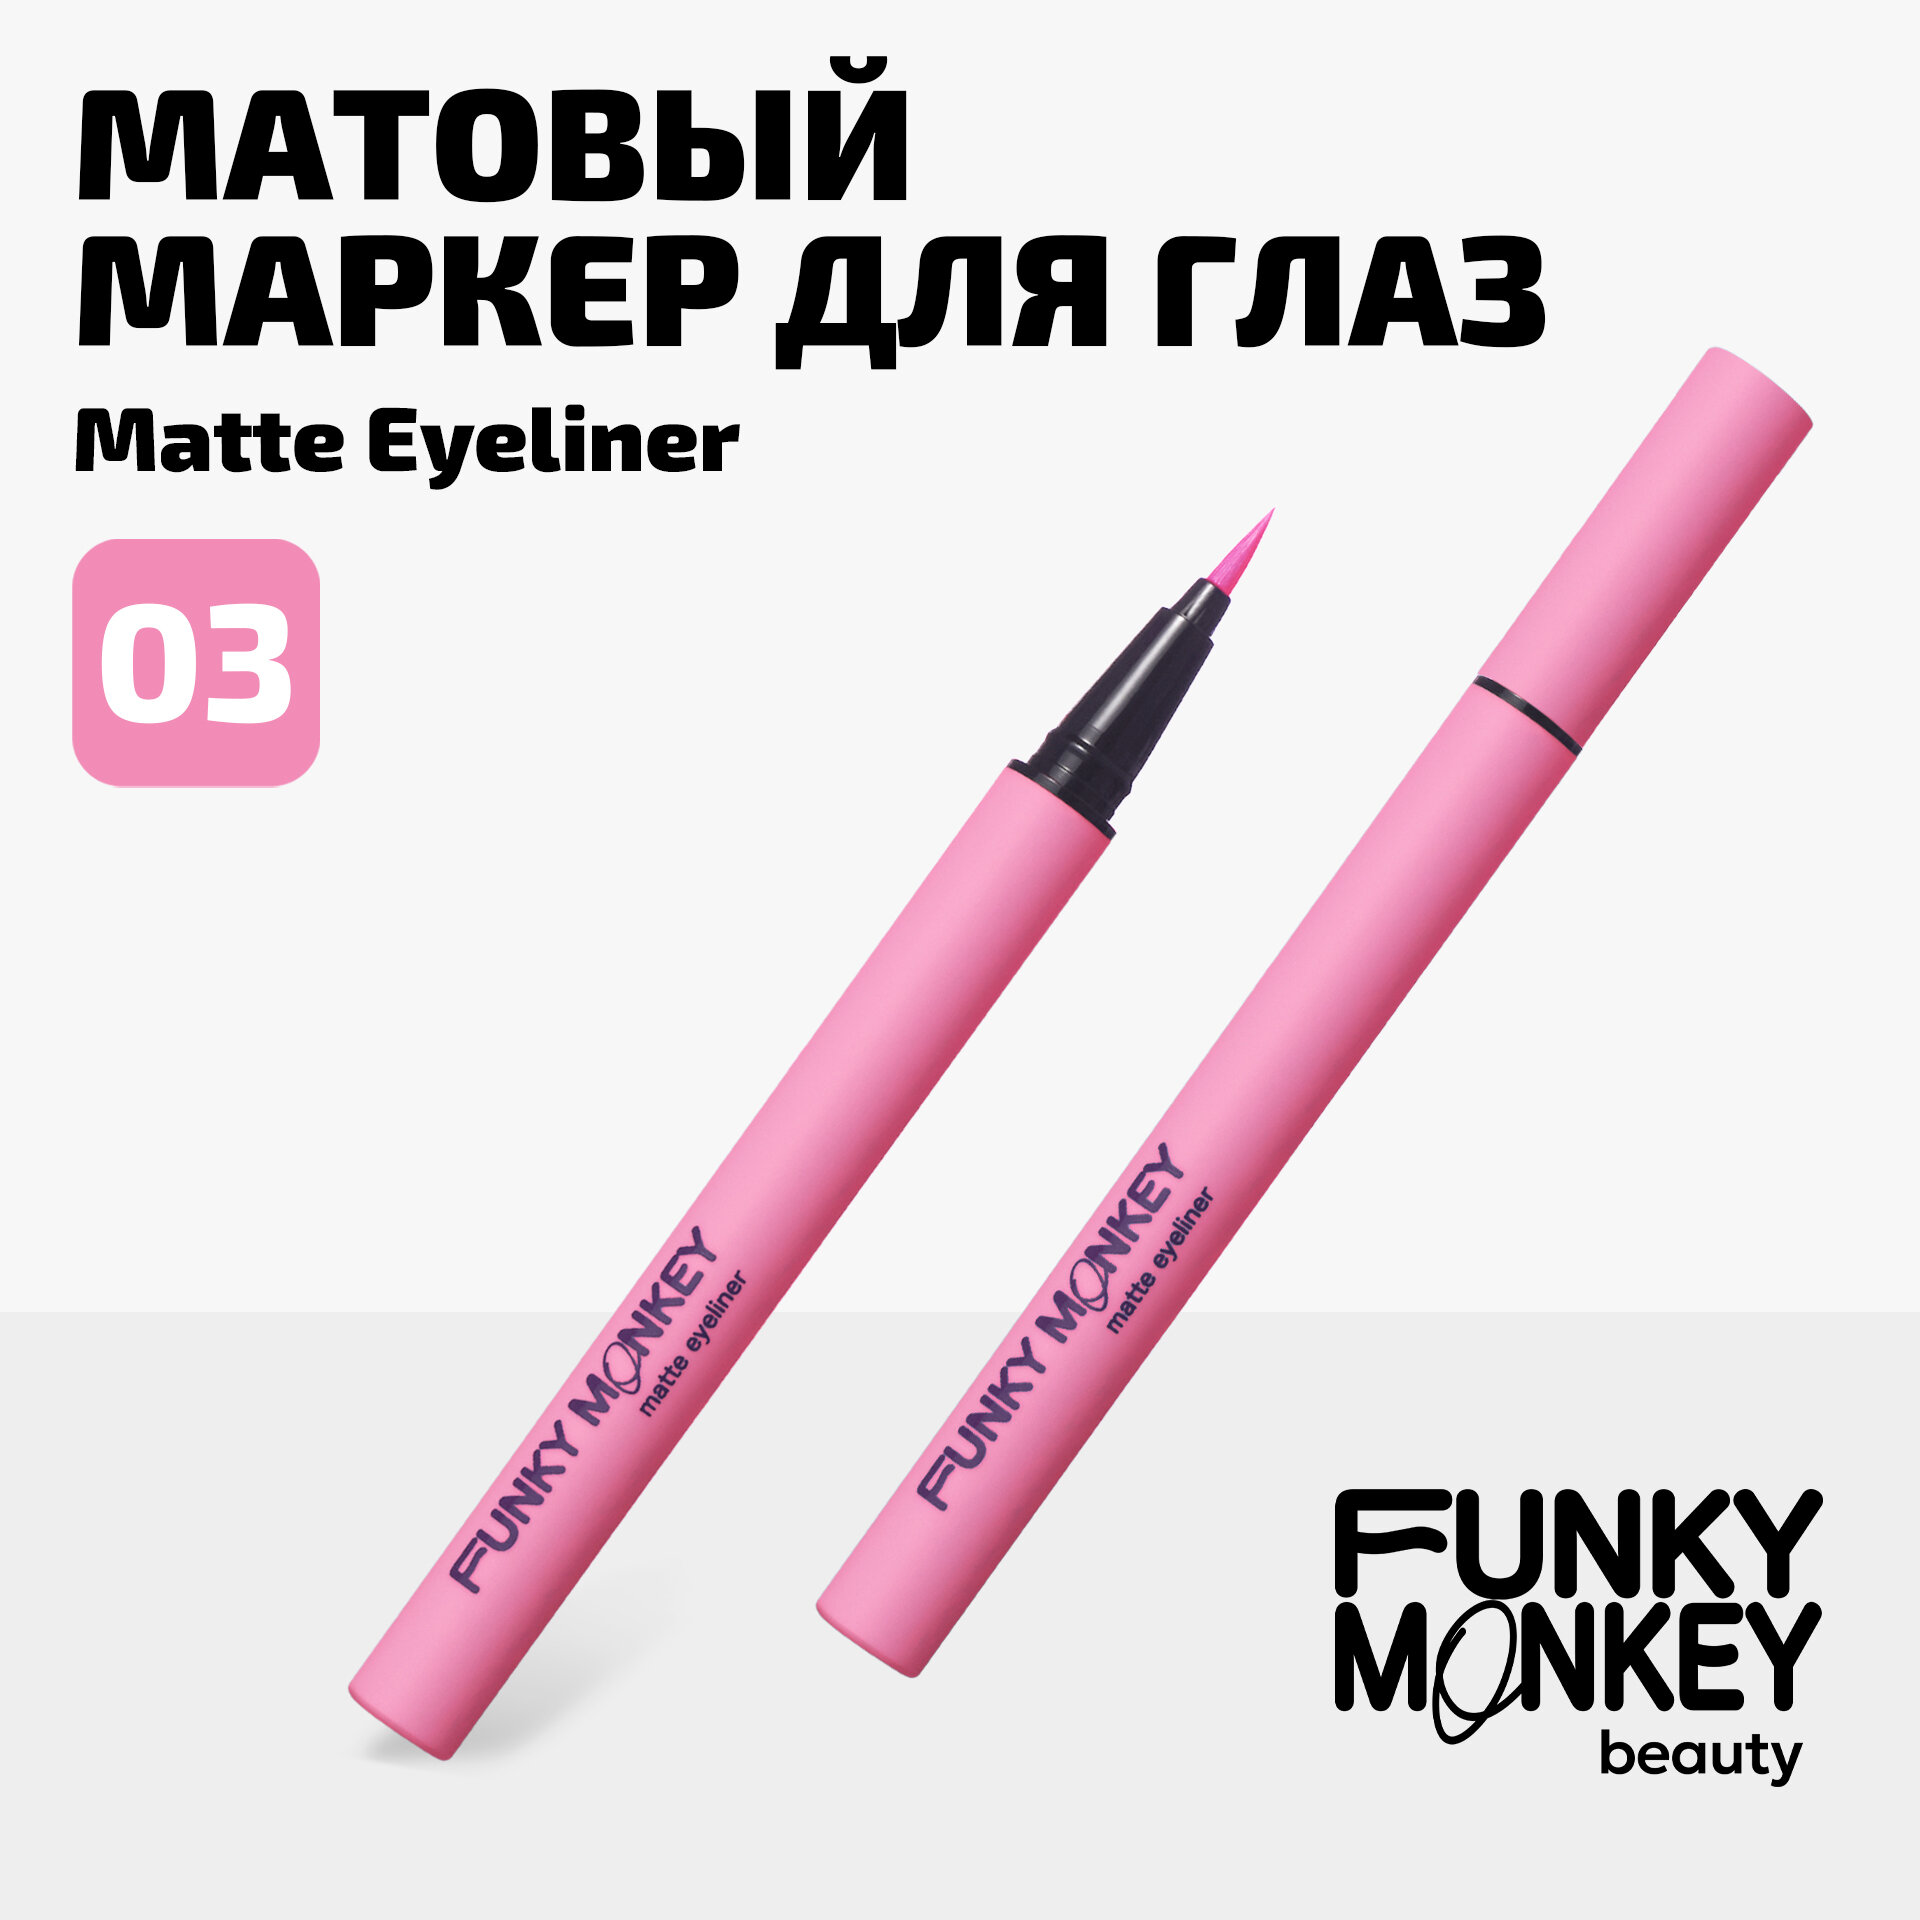 Funky Monkey Маркер для глаз матовый Matte eyeliner тон 03